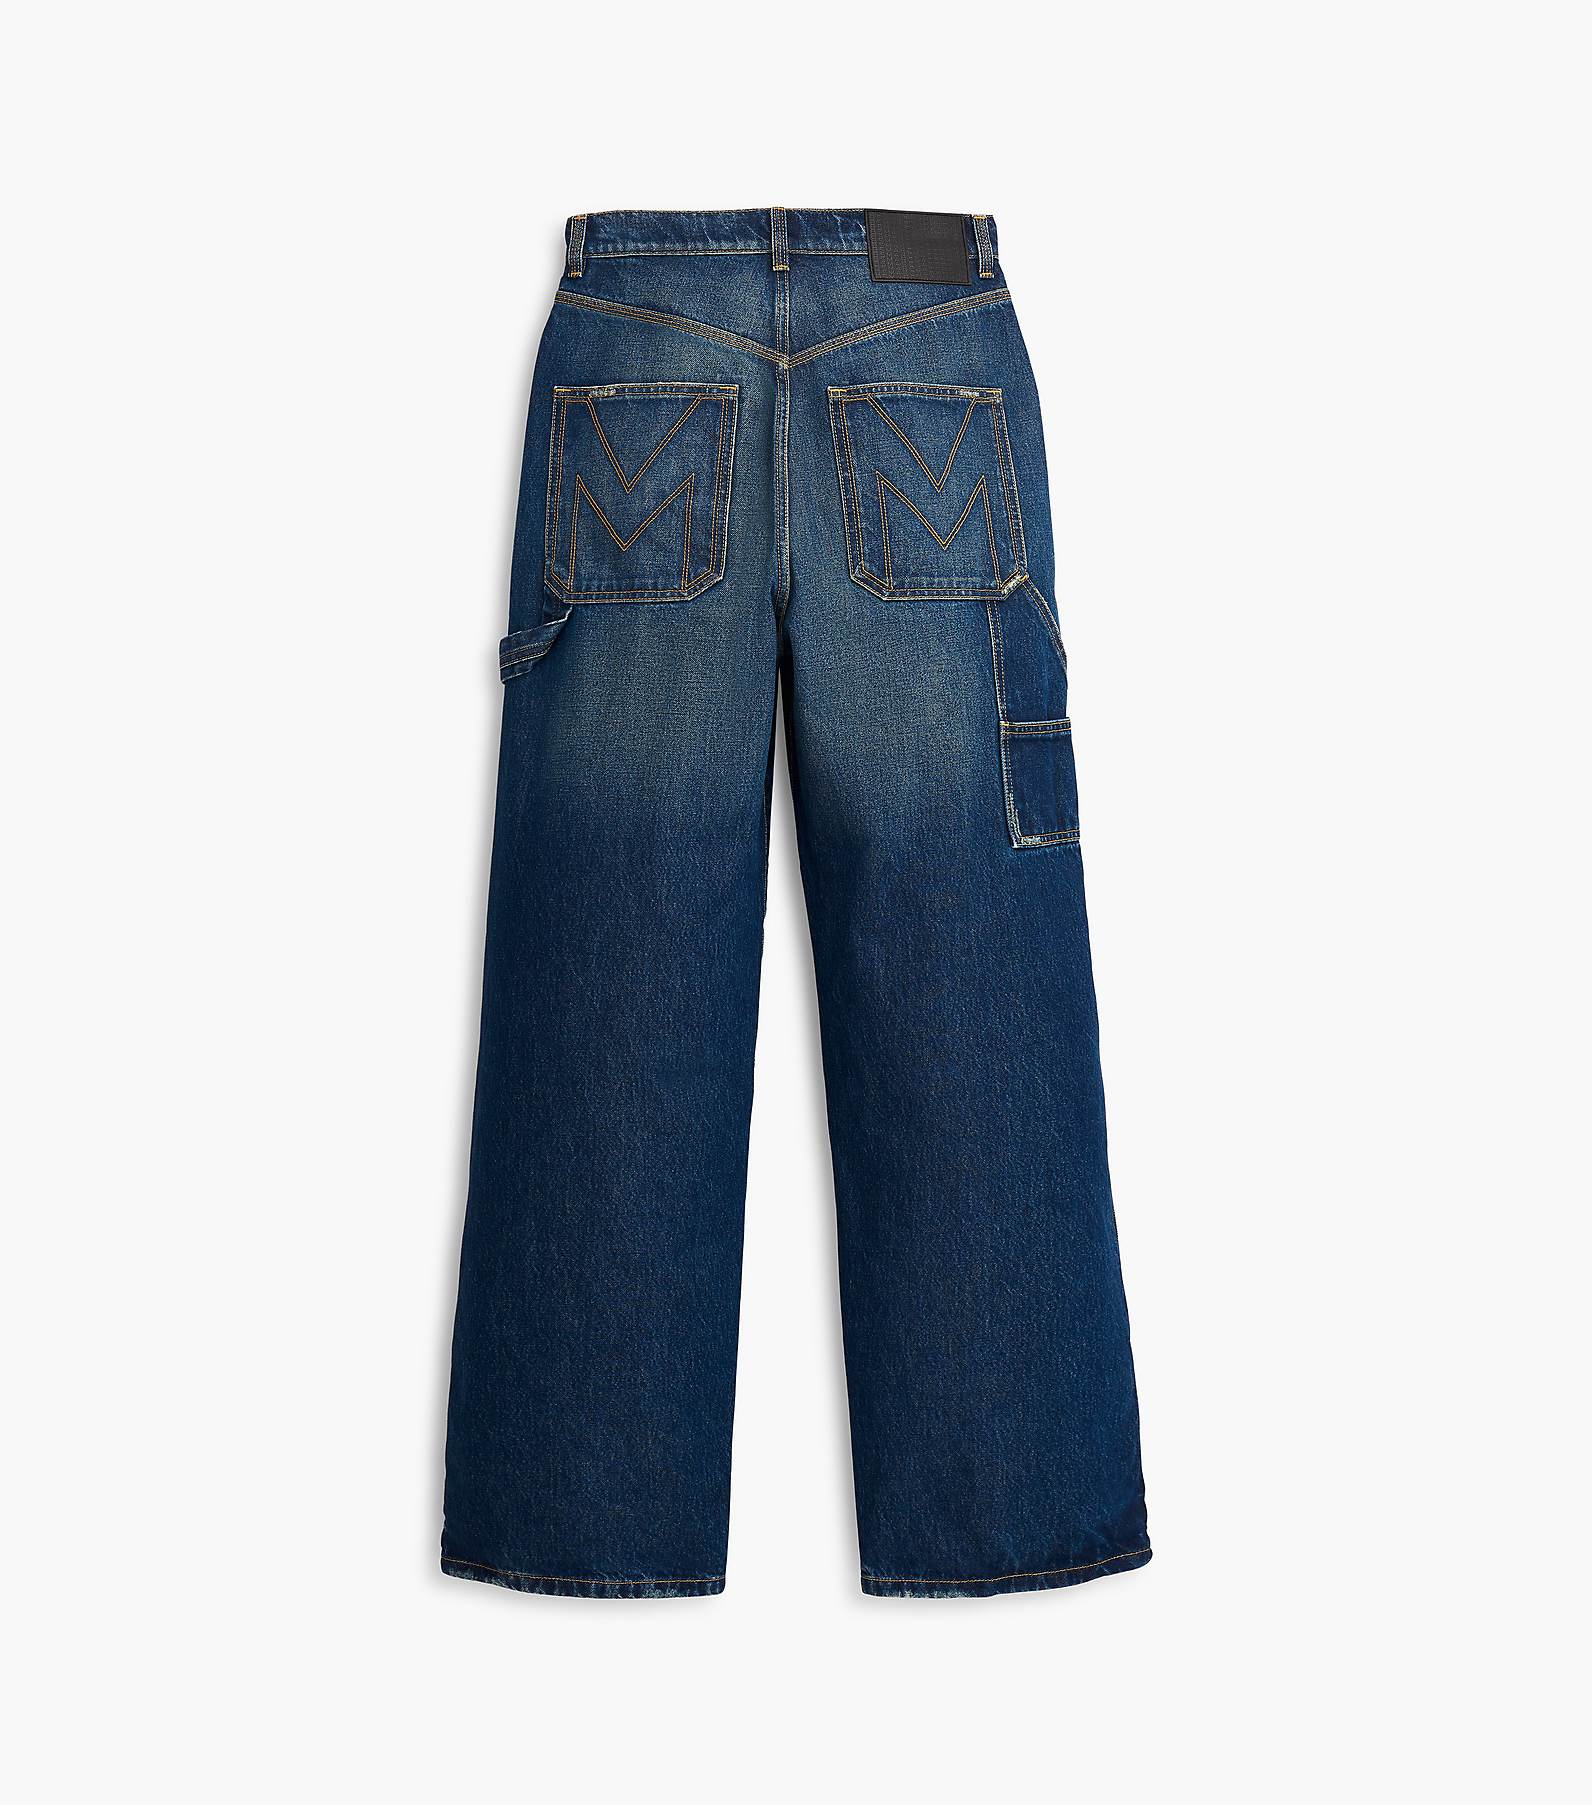 Free Shipping 2021 New Fashion 3/4 Pants For Women Denim Jeans